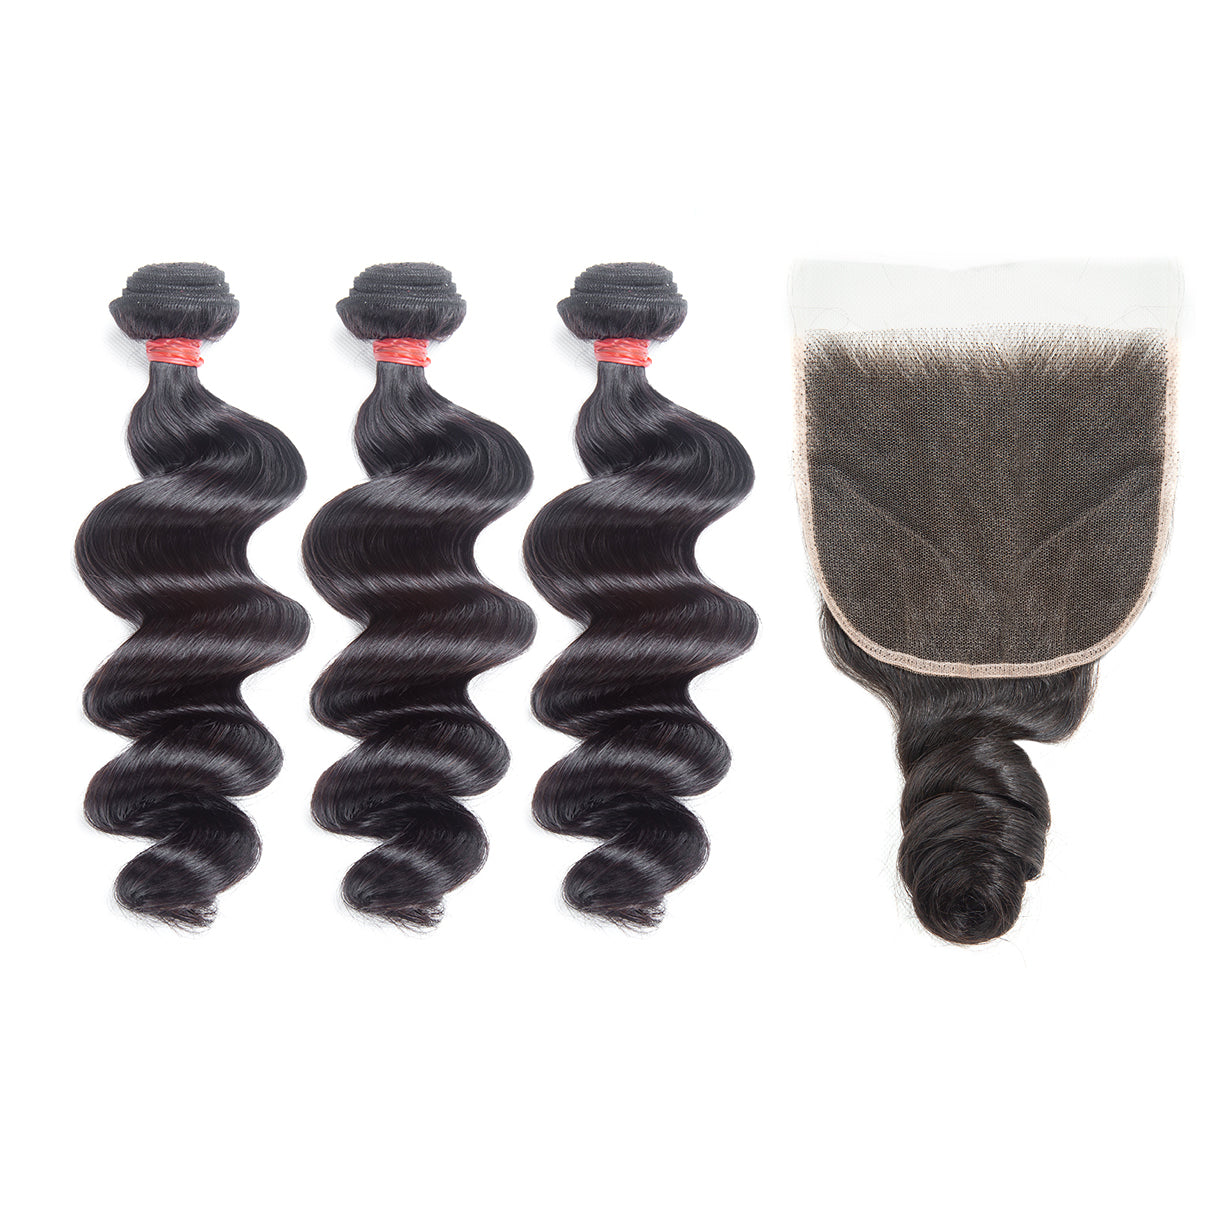 XBL Hair 9A/10A12A Human Hair Bundles with 5x5 Closure Loose Wave